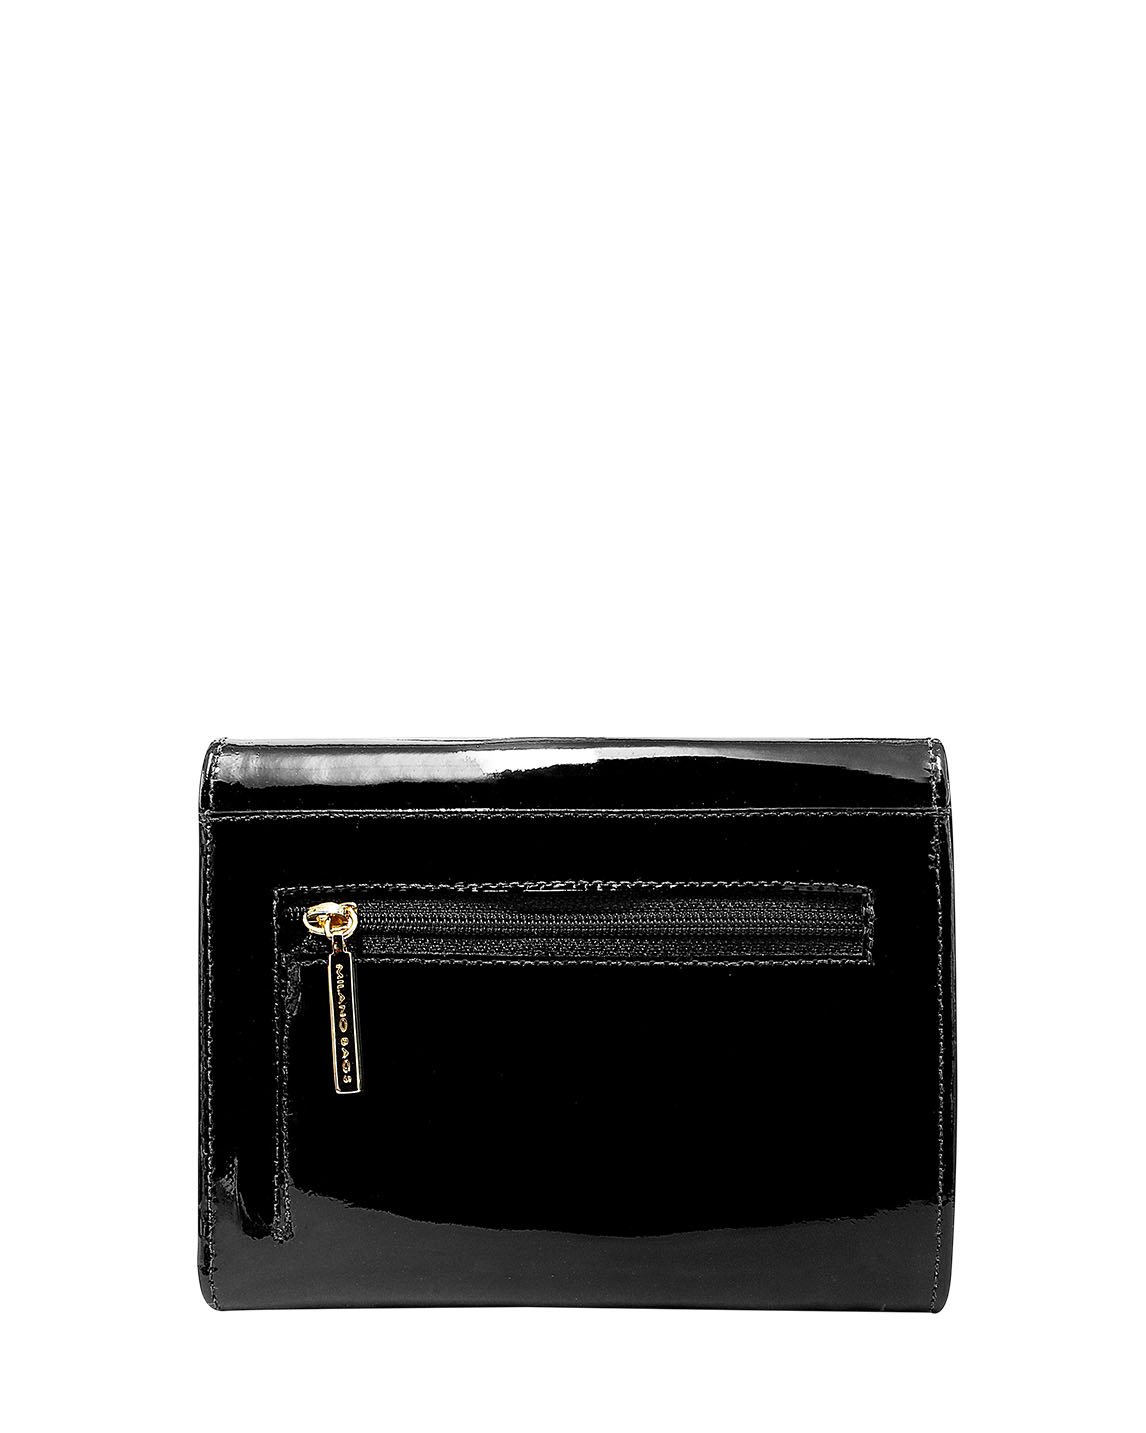 Billetera de Mujer BM-501 Color Negro